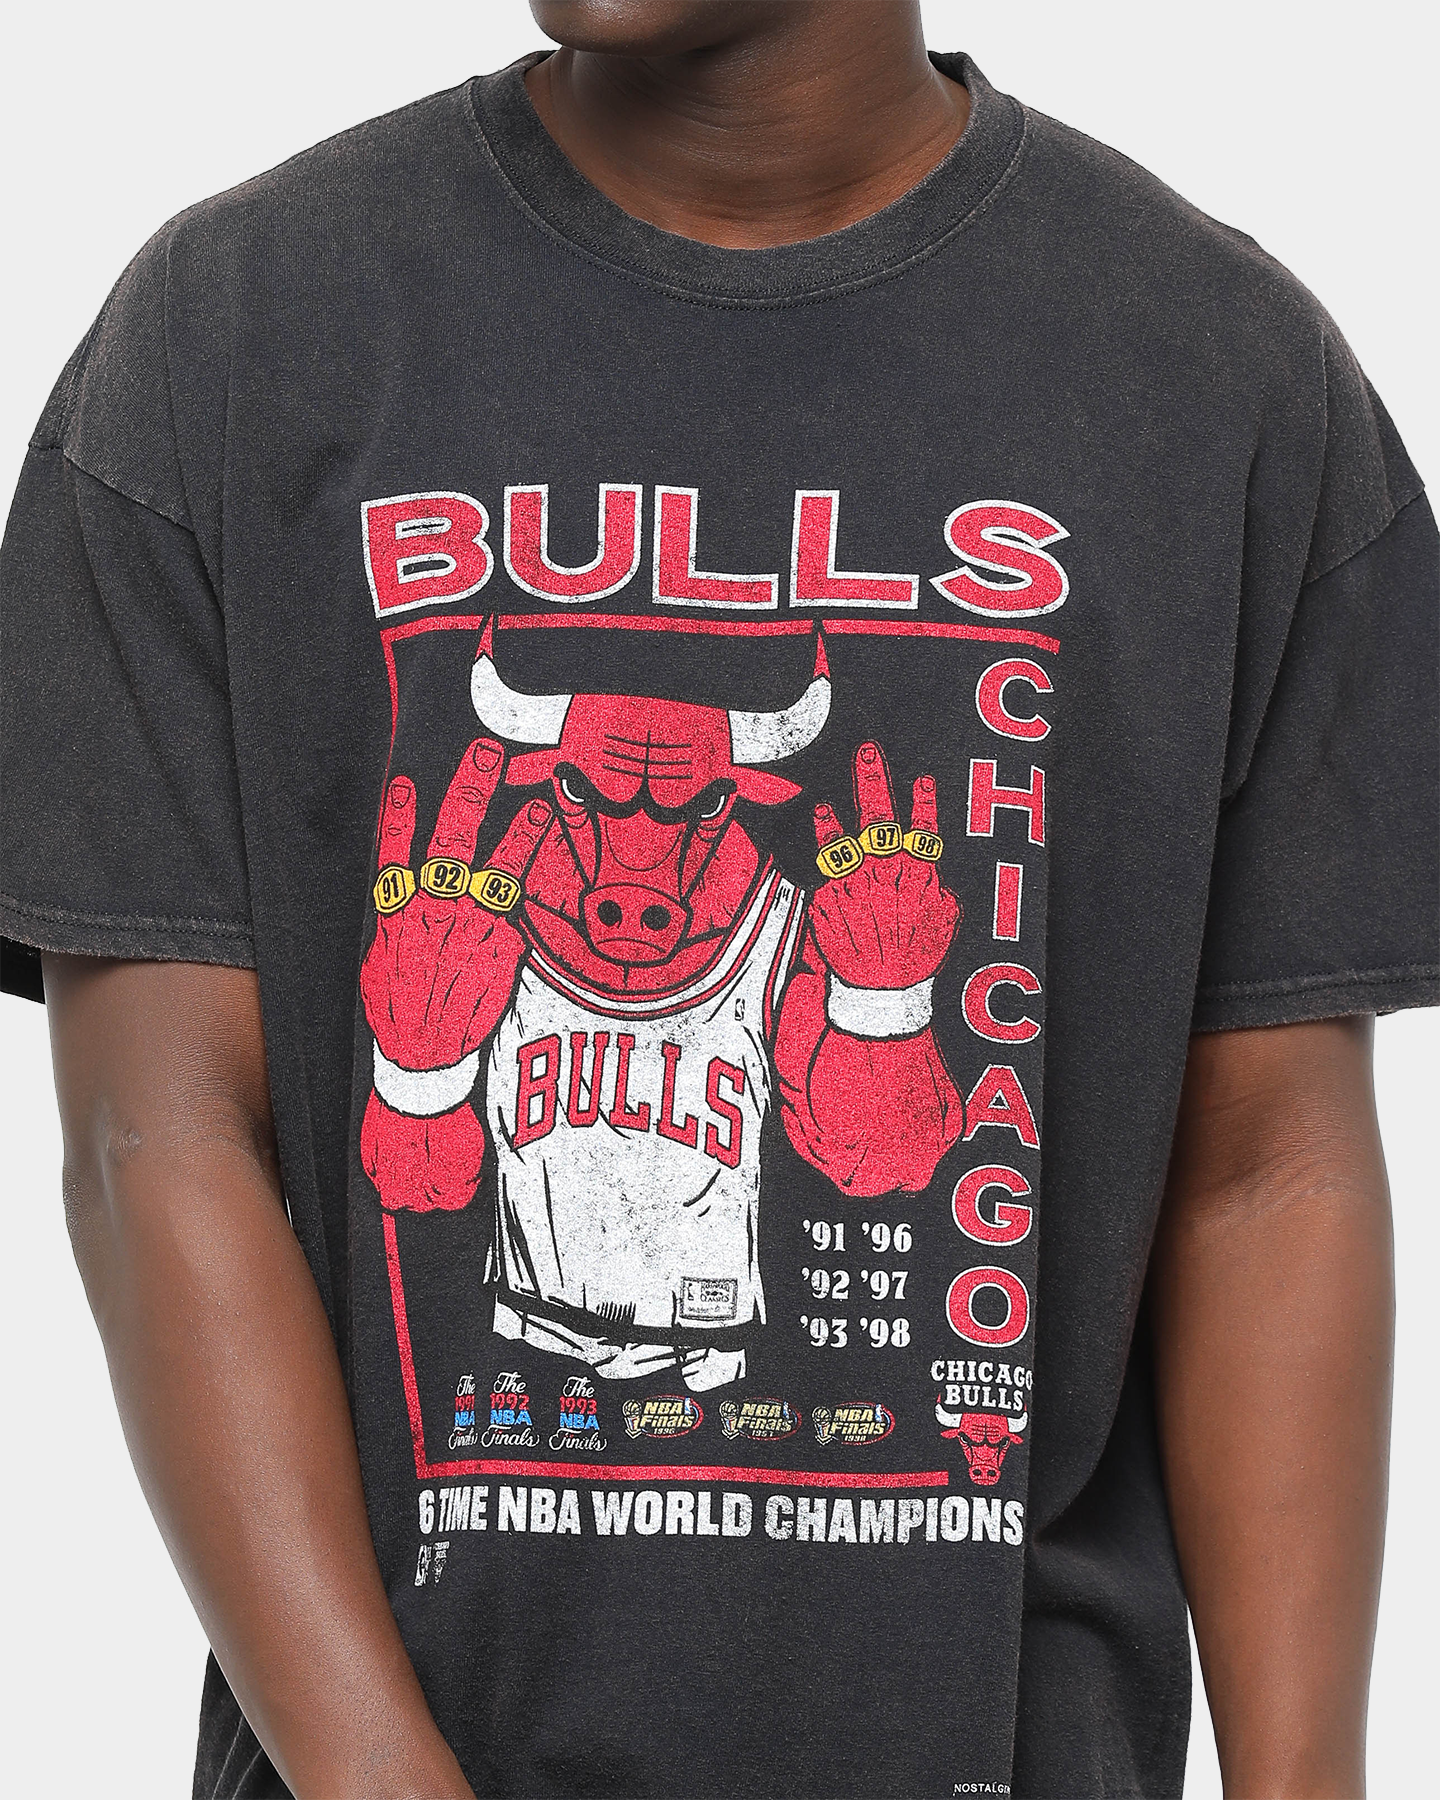 vintage chicago bulls championship shirts